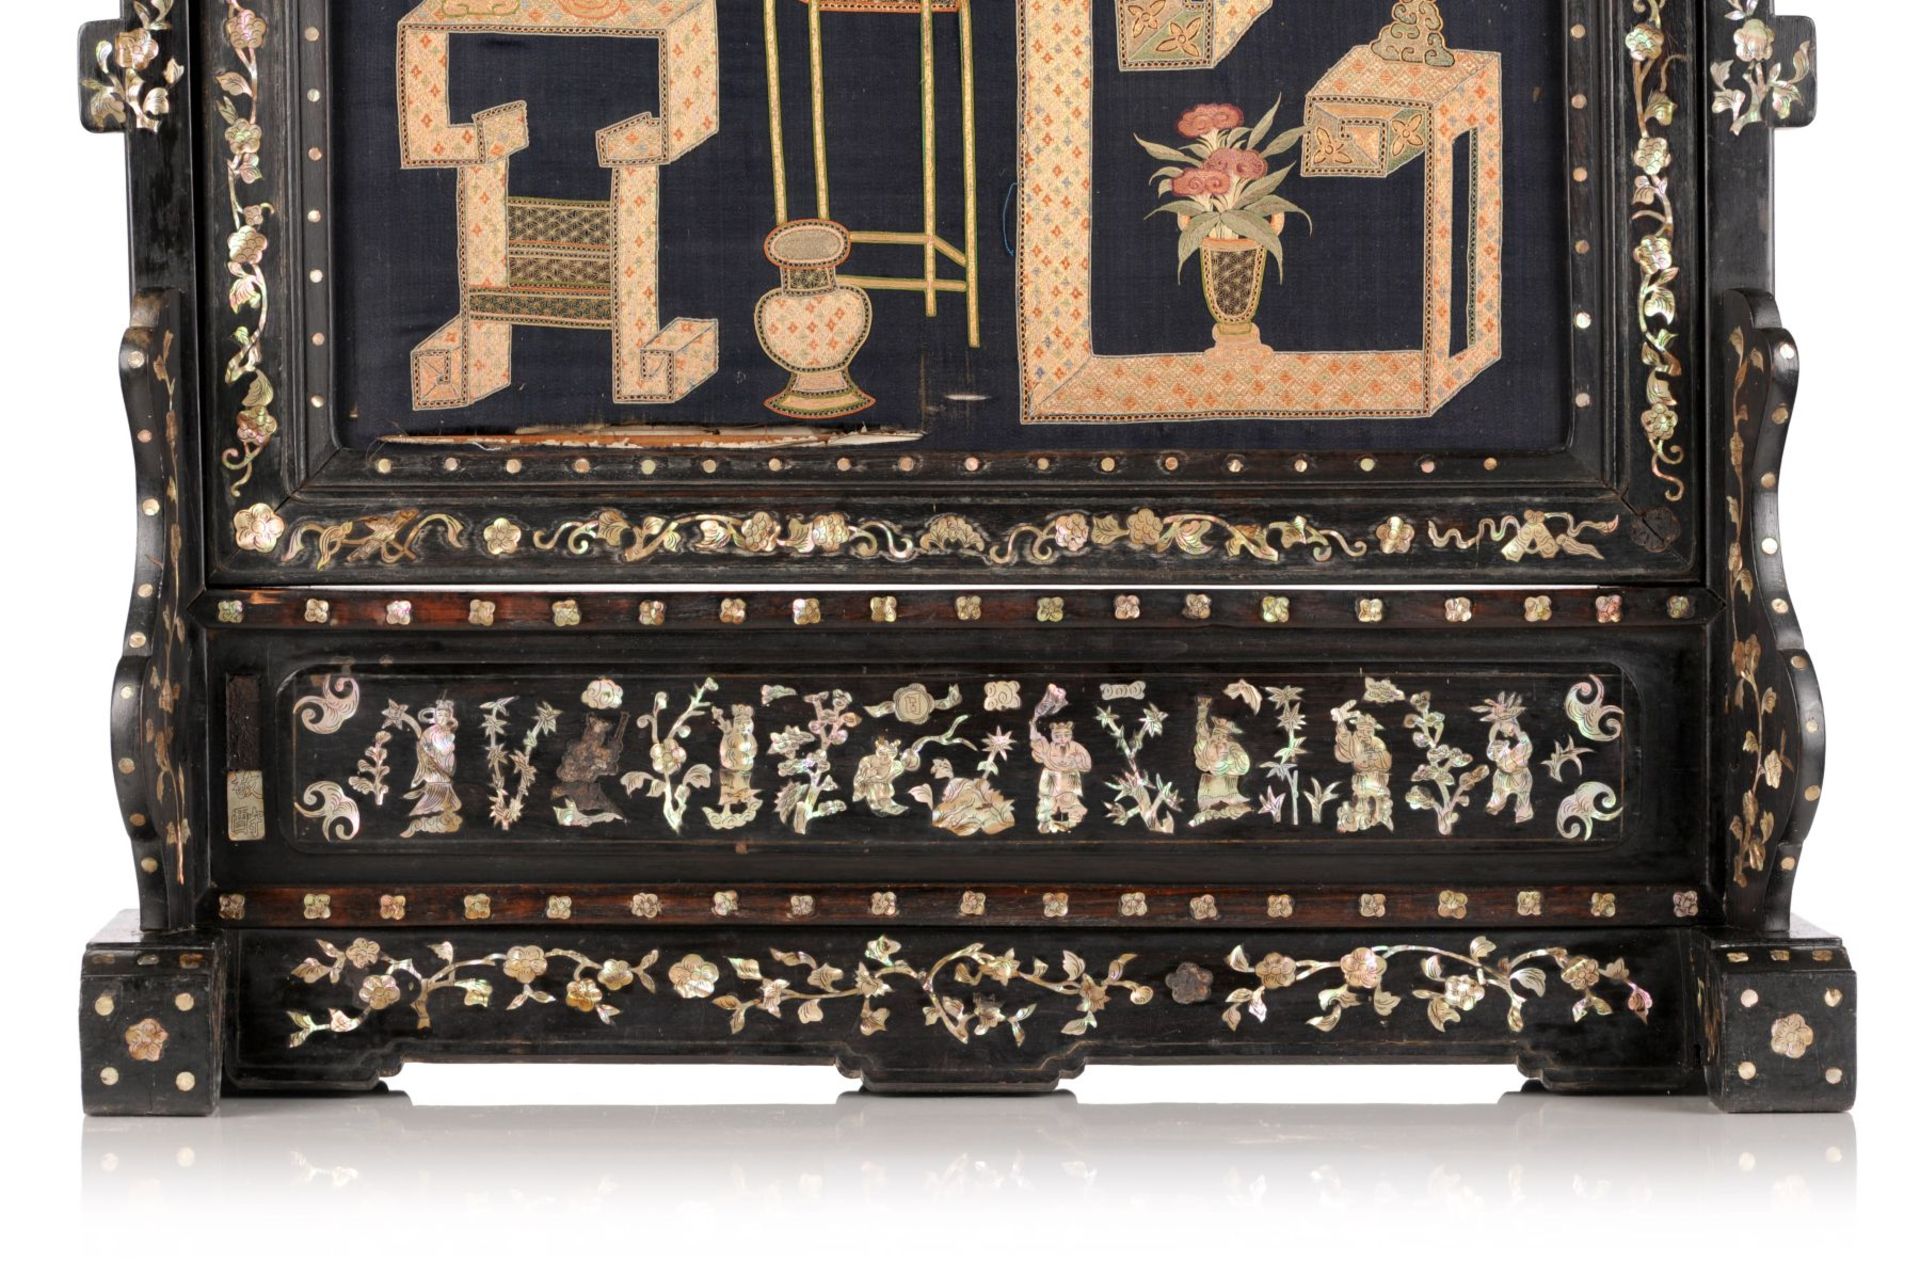 Tischparavent mit Perlmuttinkrustationen. China. Späte Qing-Dynasty, Mitte 19. Jh. - Image 6 of 7